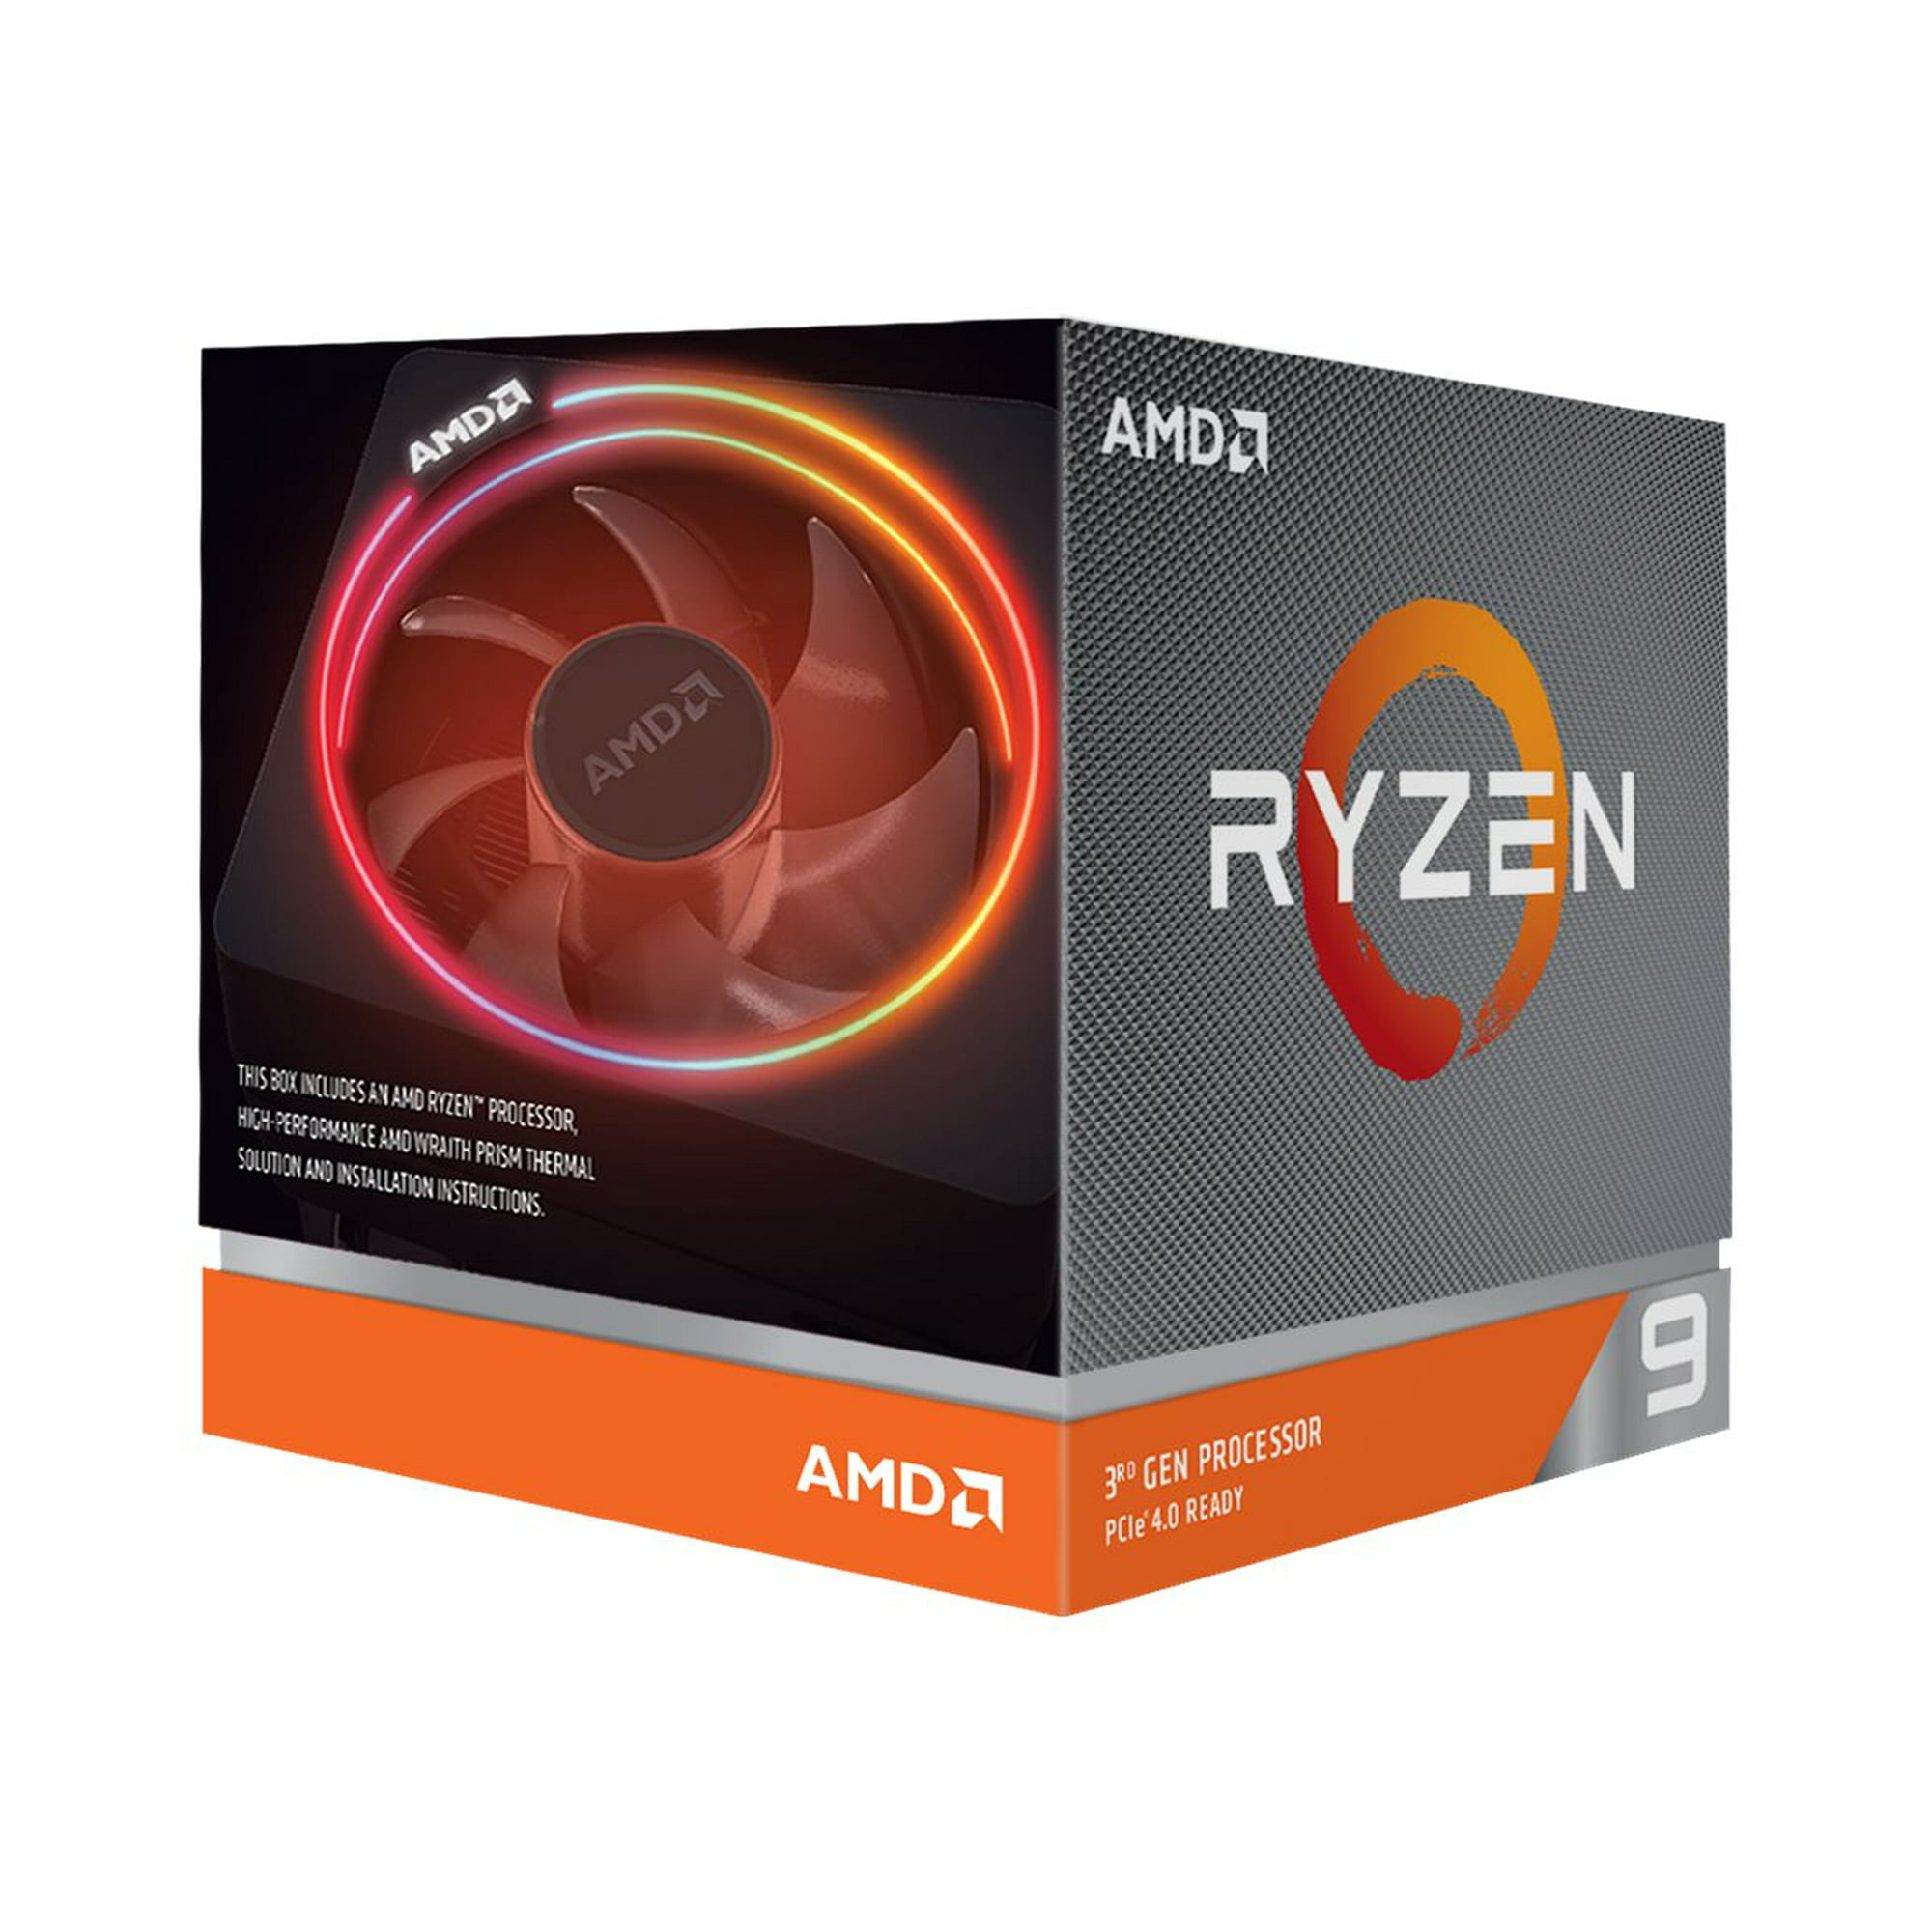 AMD Ryzen 9 3900X - 3.8 GHz - 12-core - 24 threads - 64 MB cache